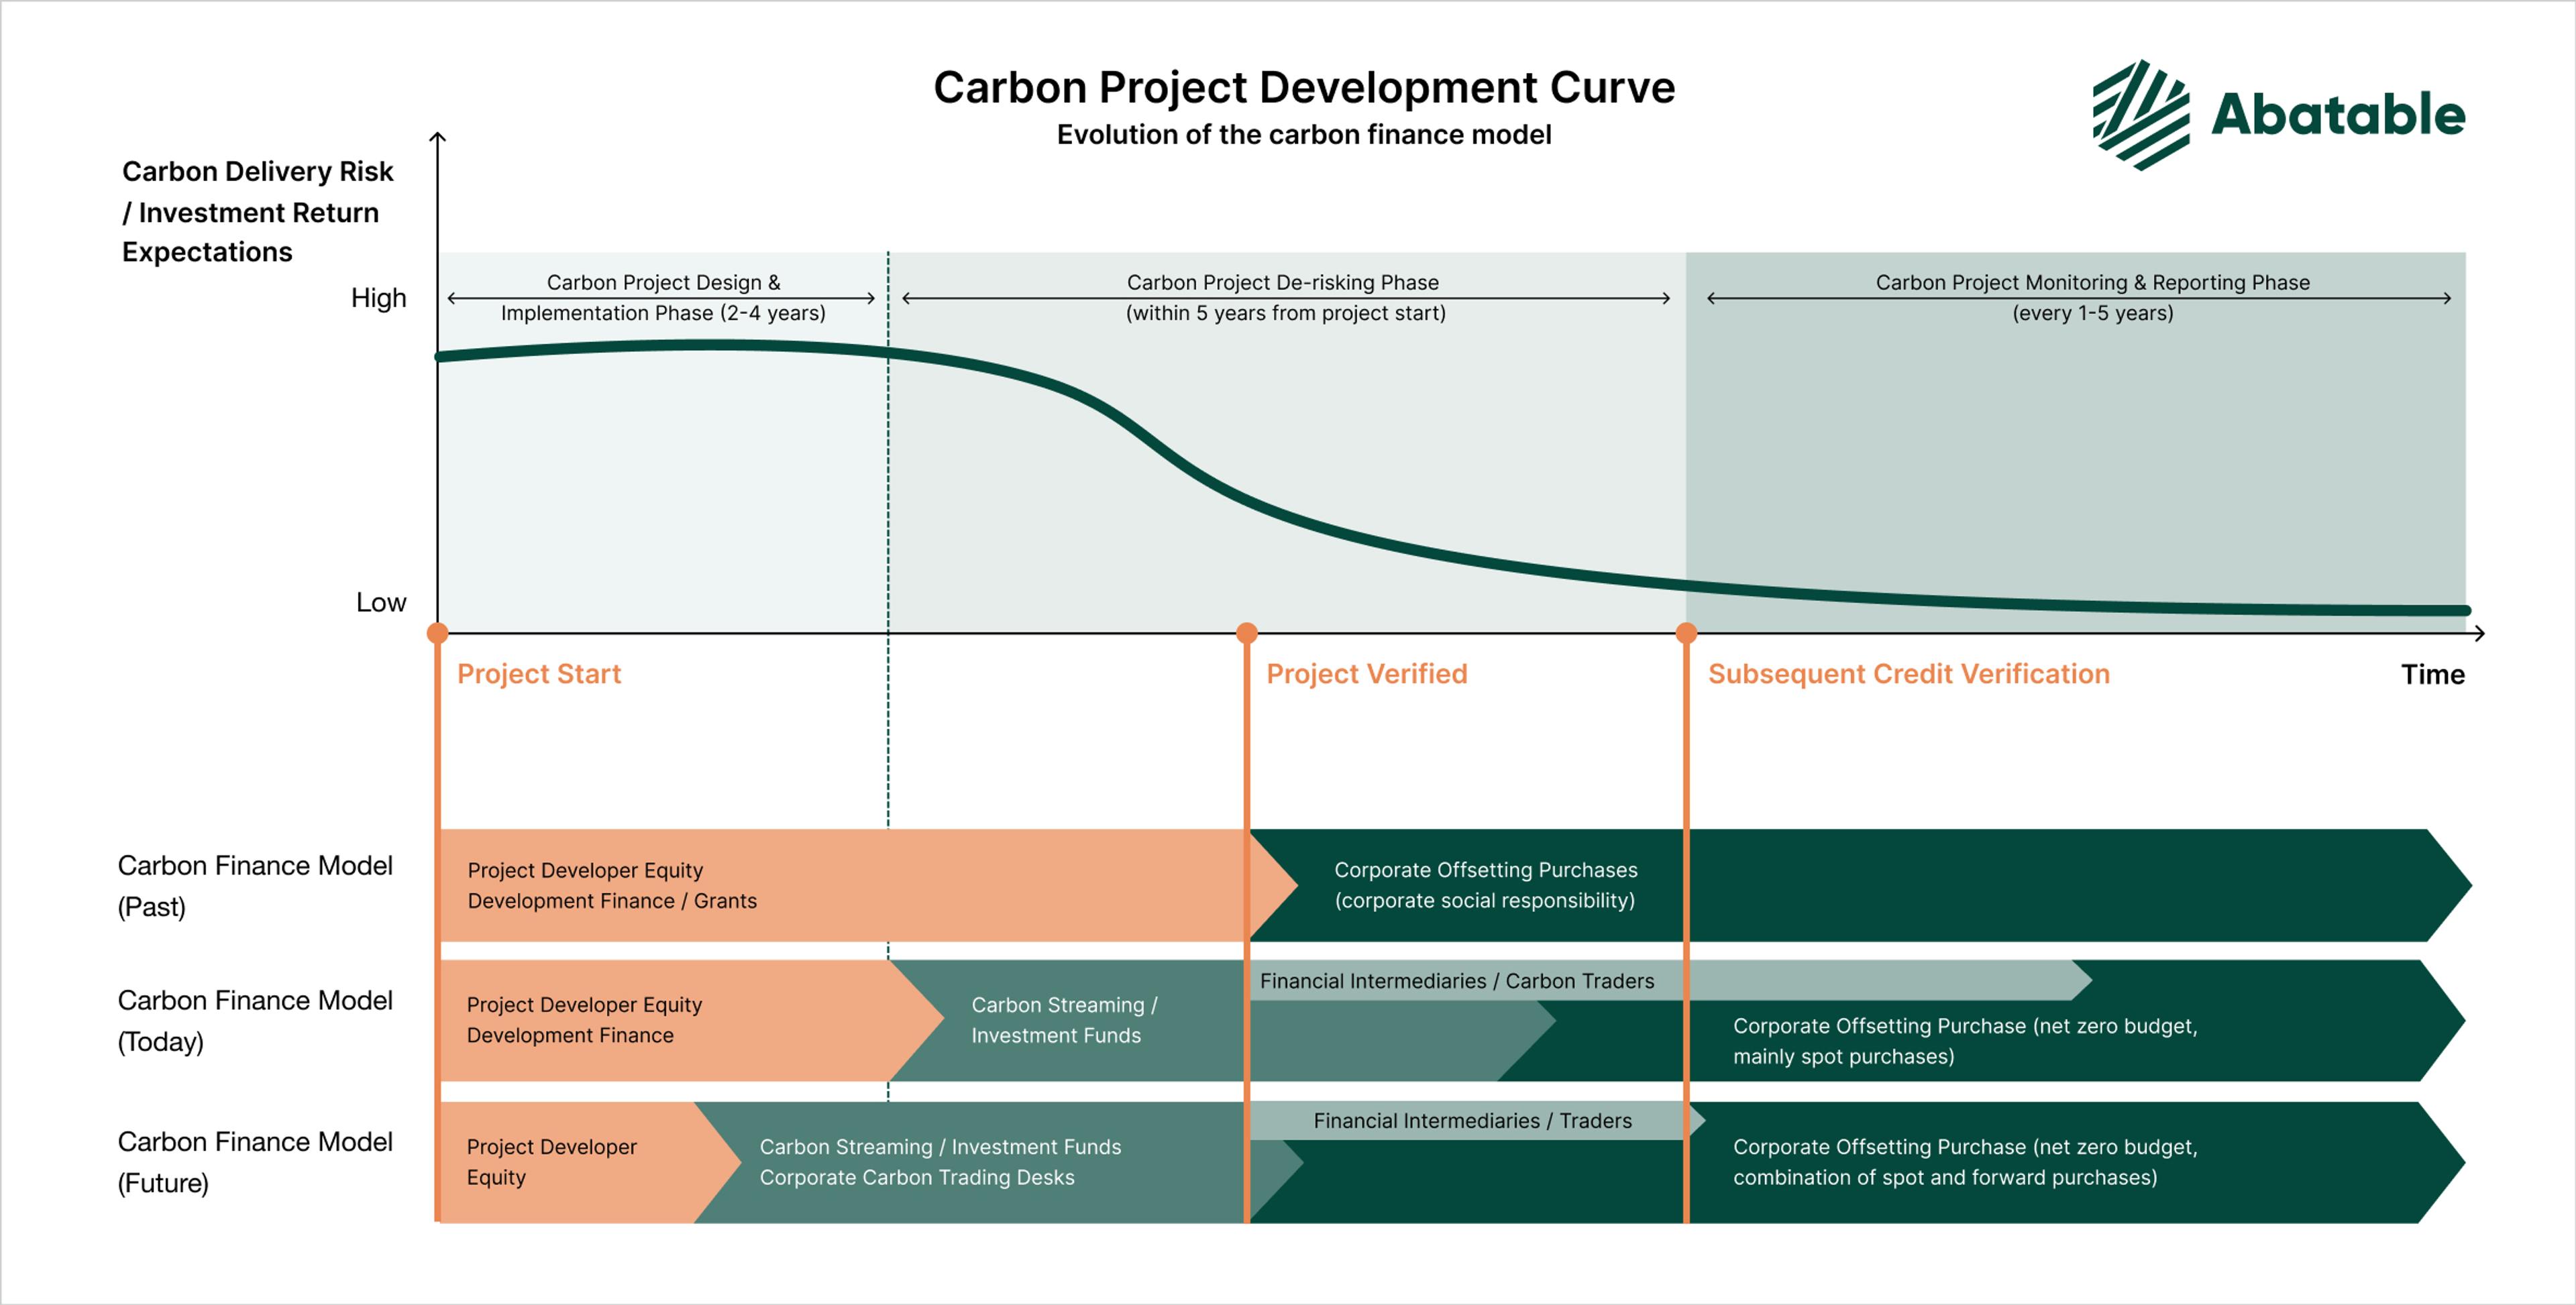 Carbon Project Development Curve Evolution of the Carbon Finance Model